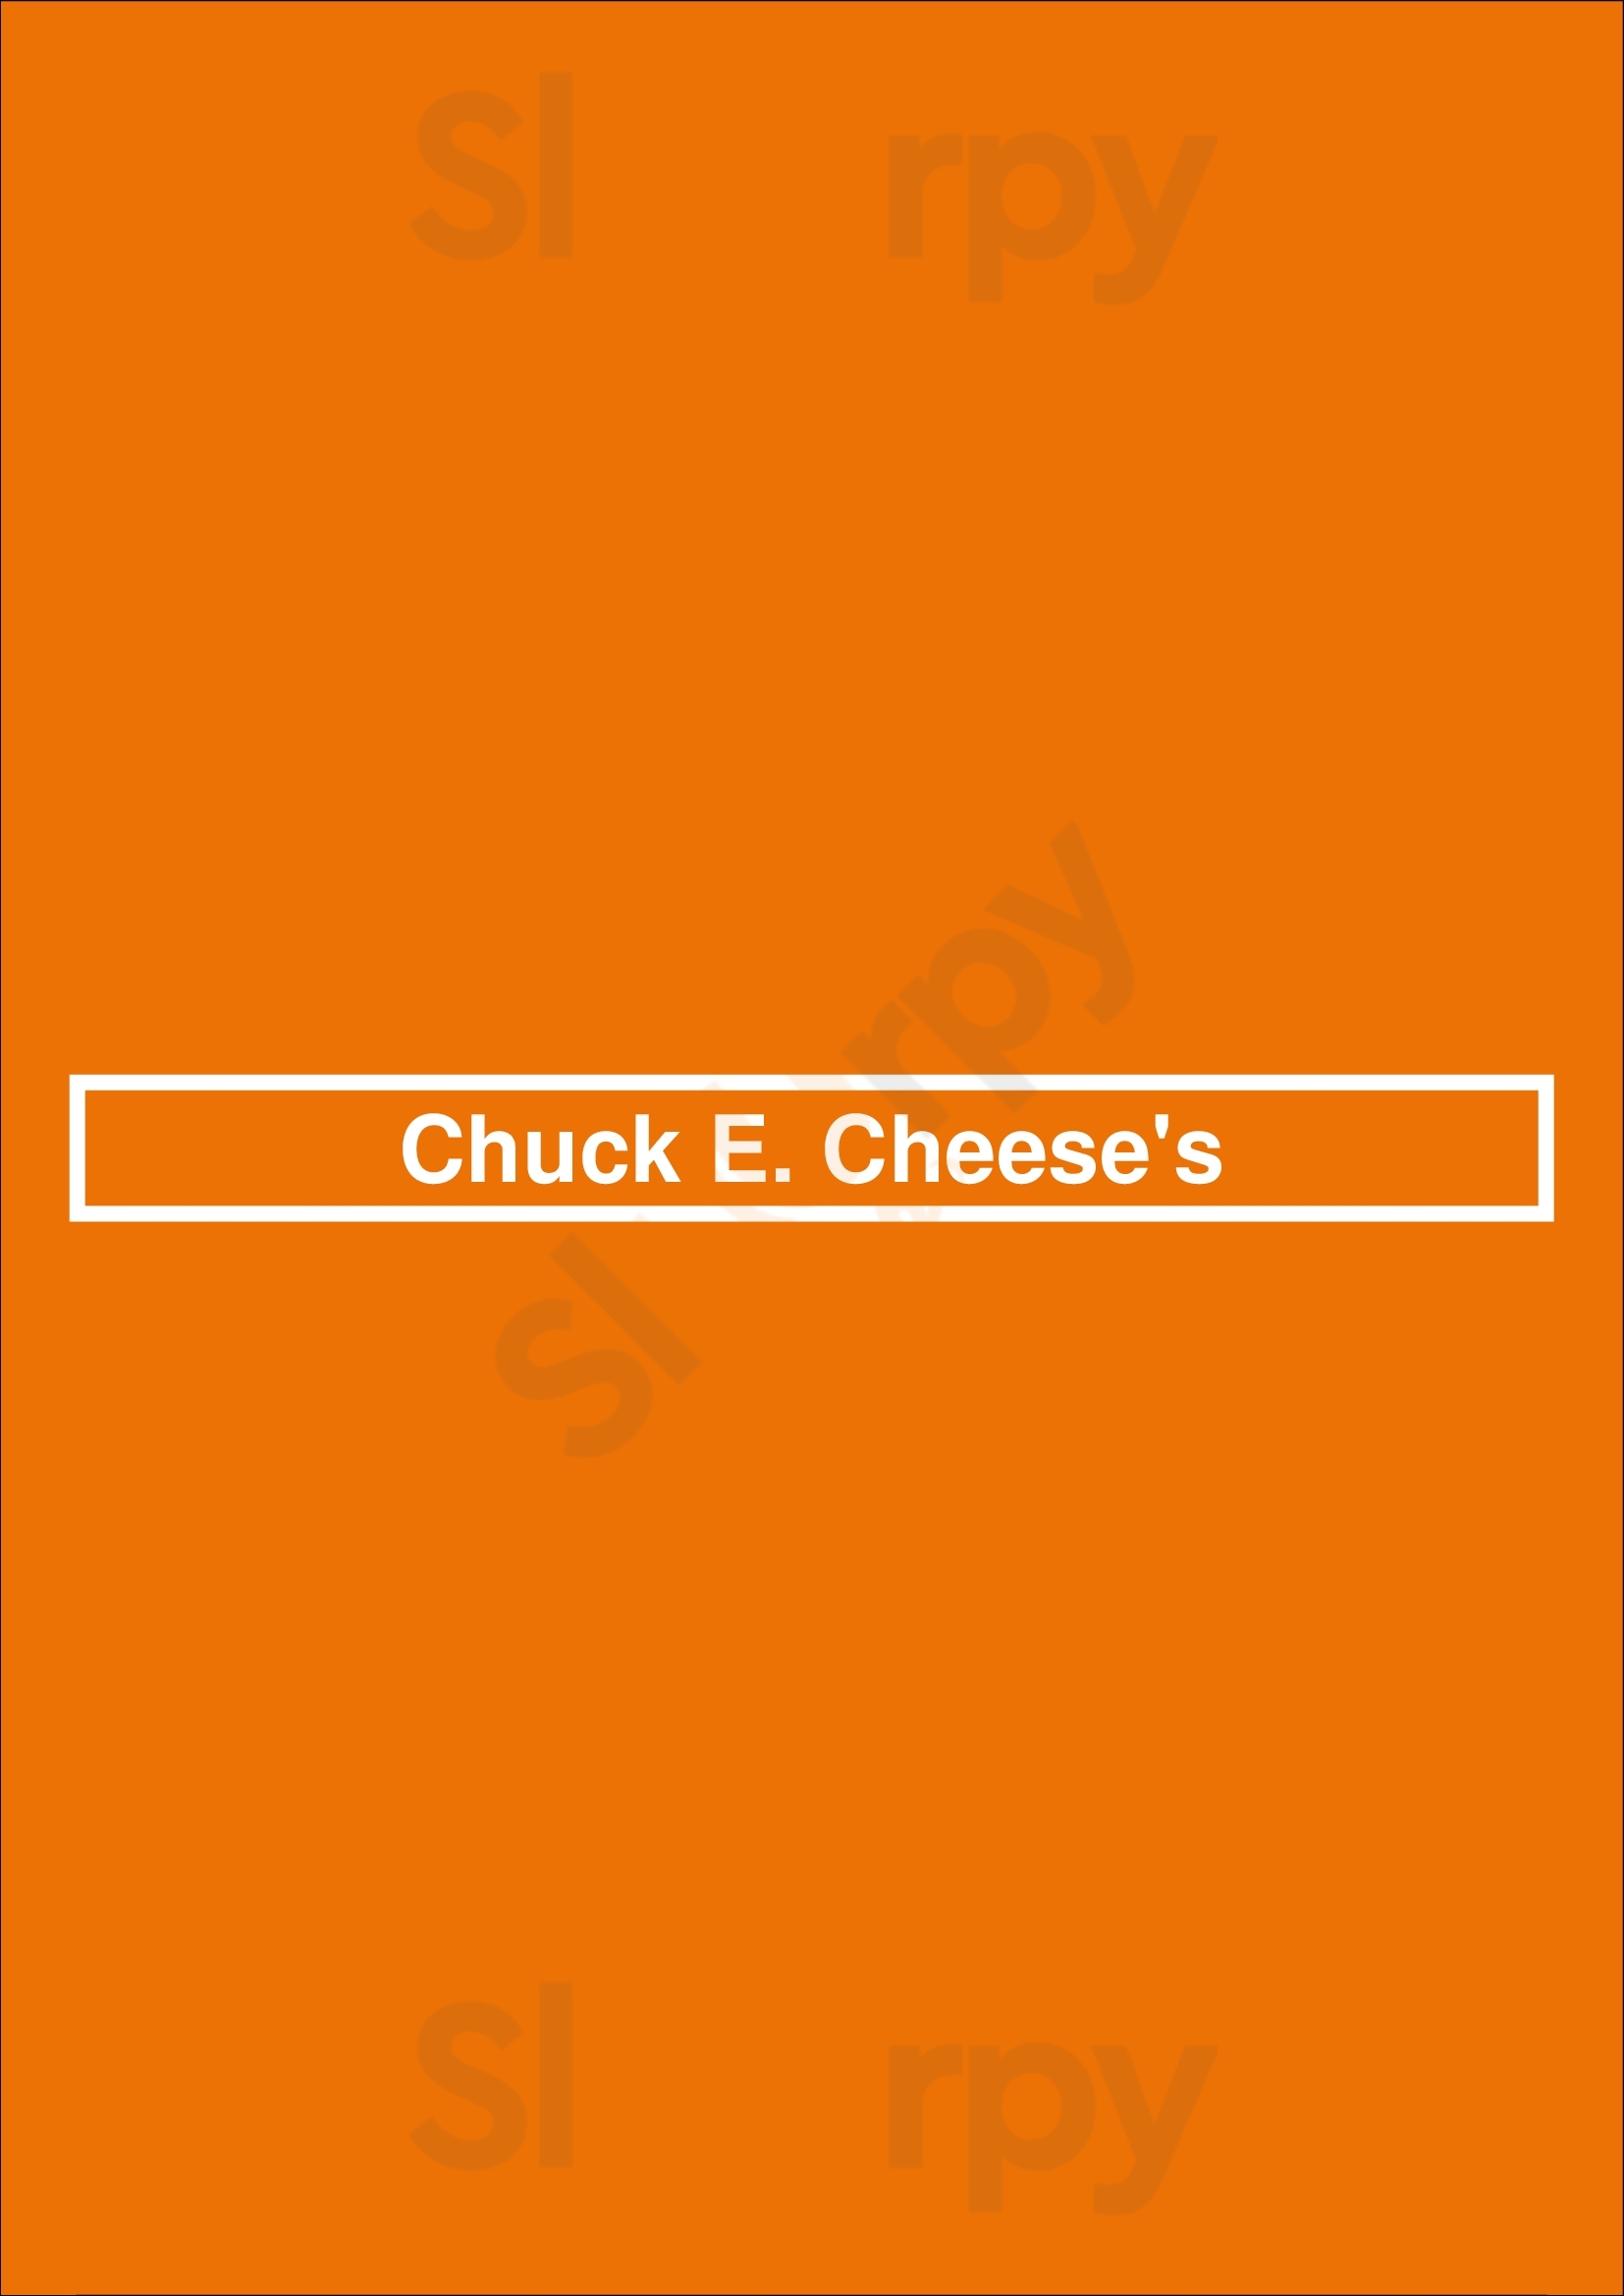 Chuck E. Cheese Oklahoma City Menu - 1